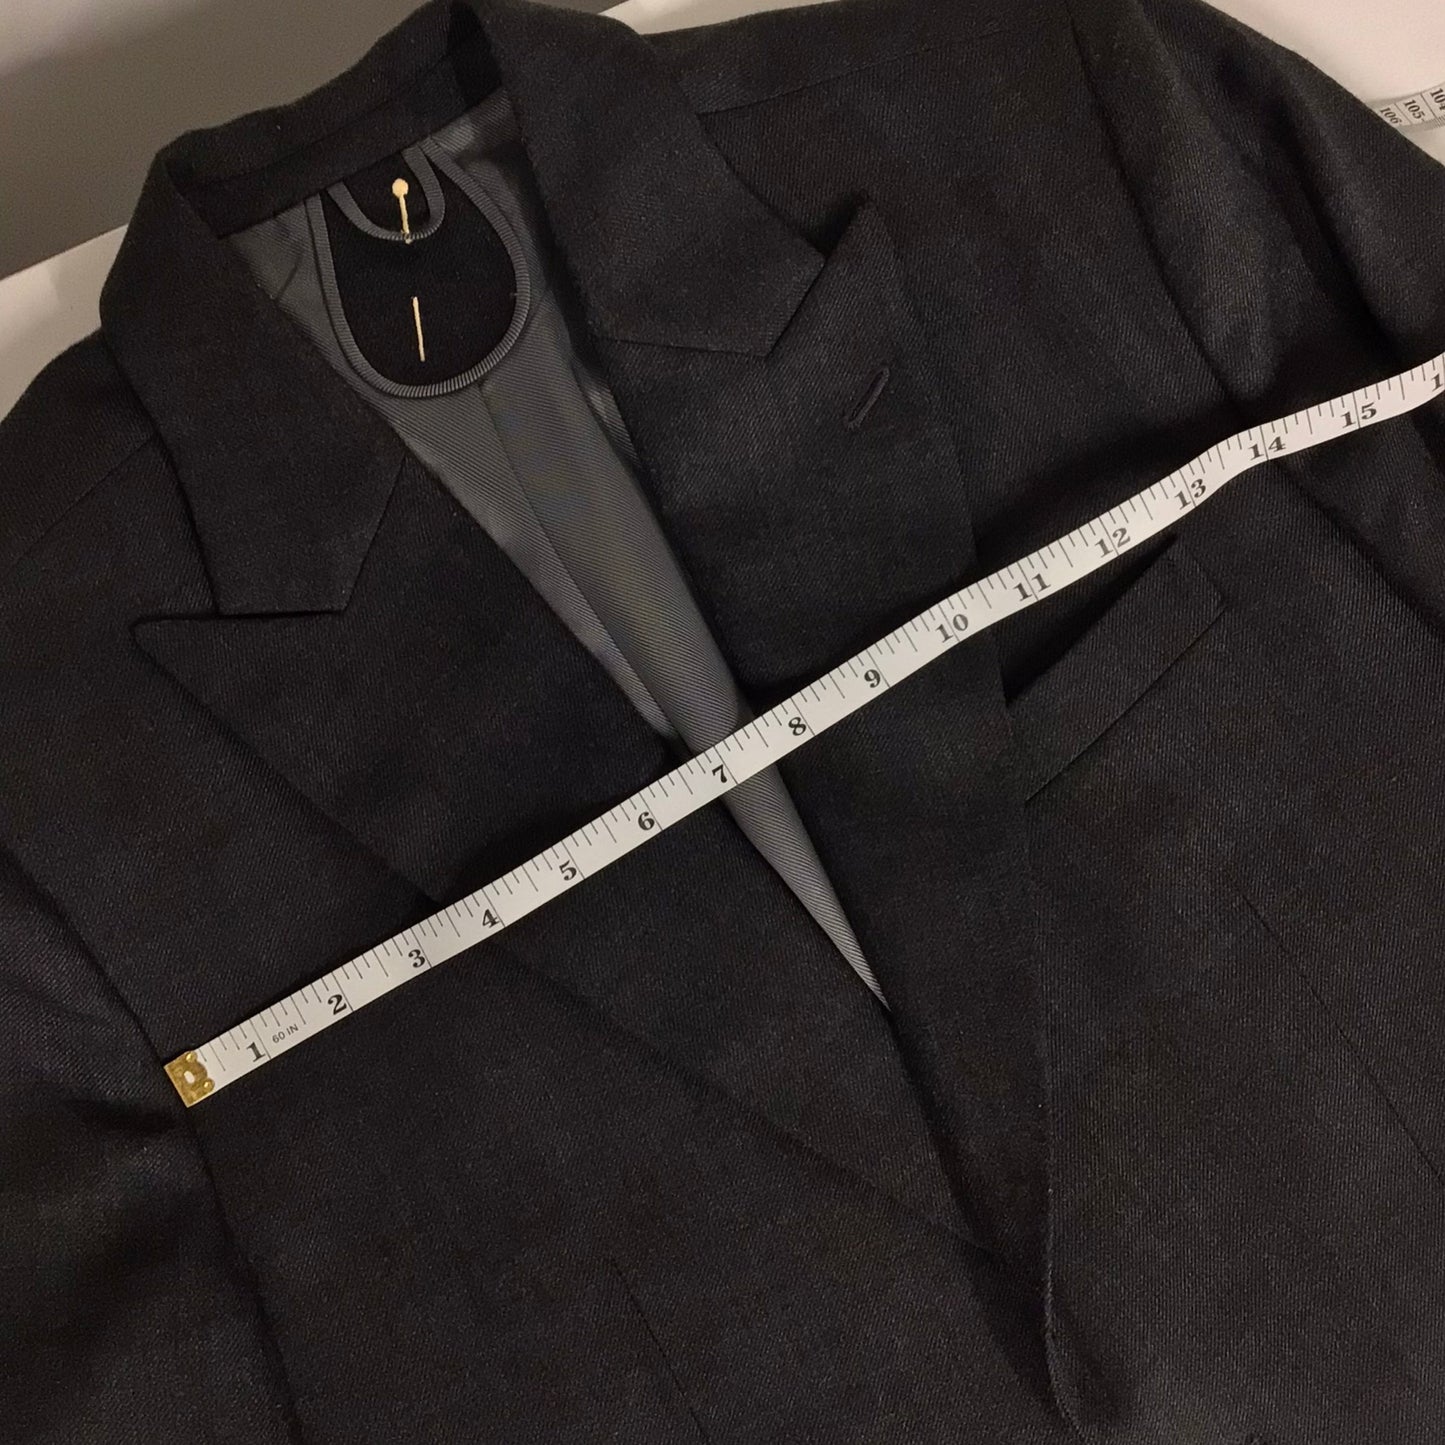 Grey Blazer Jacket Hand Tailored for JZH Size M